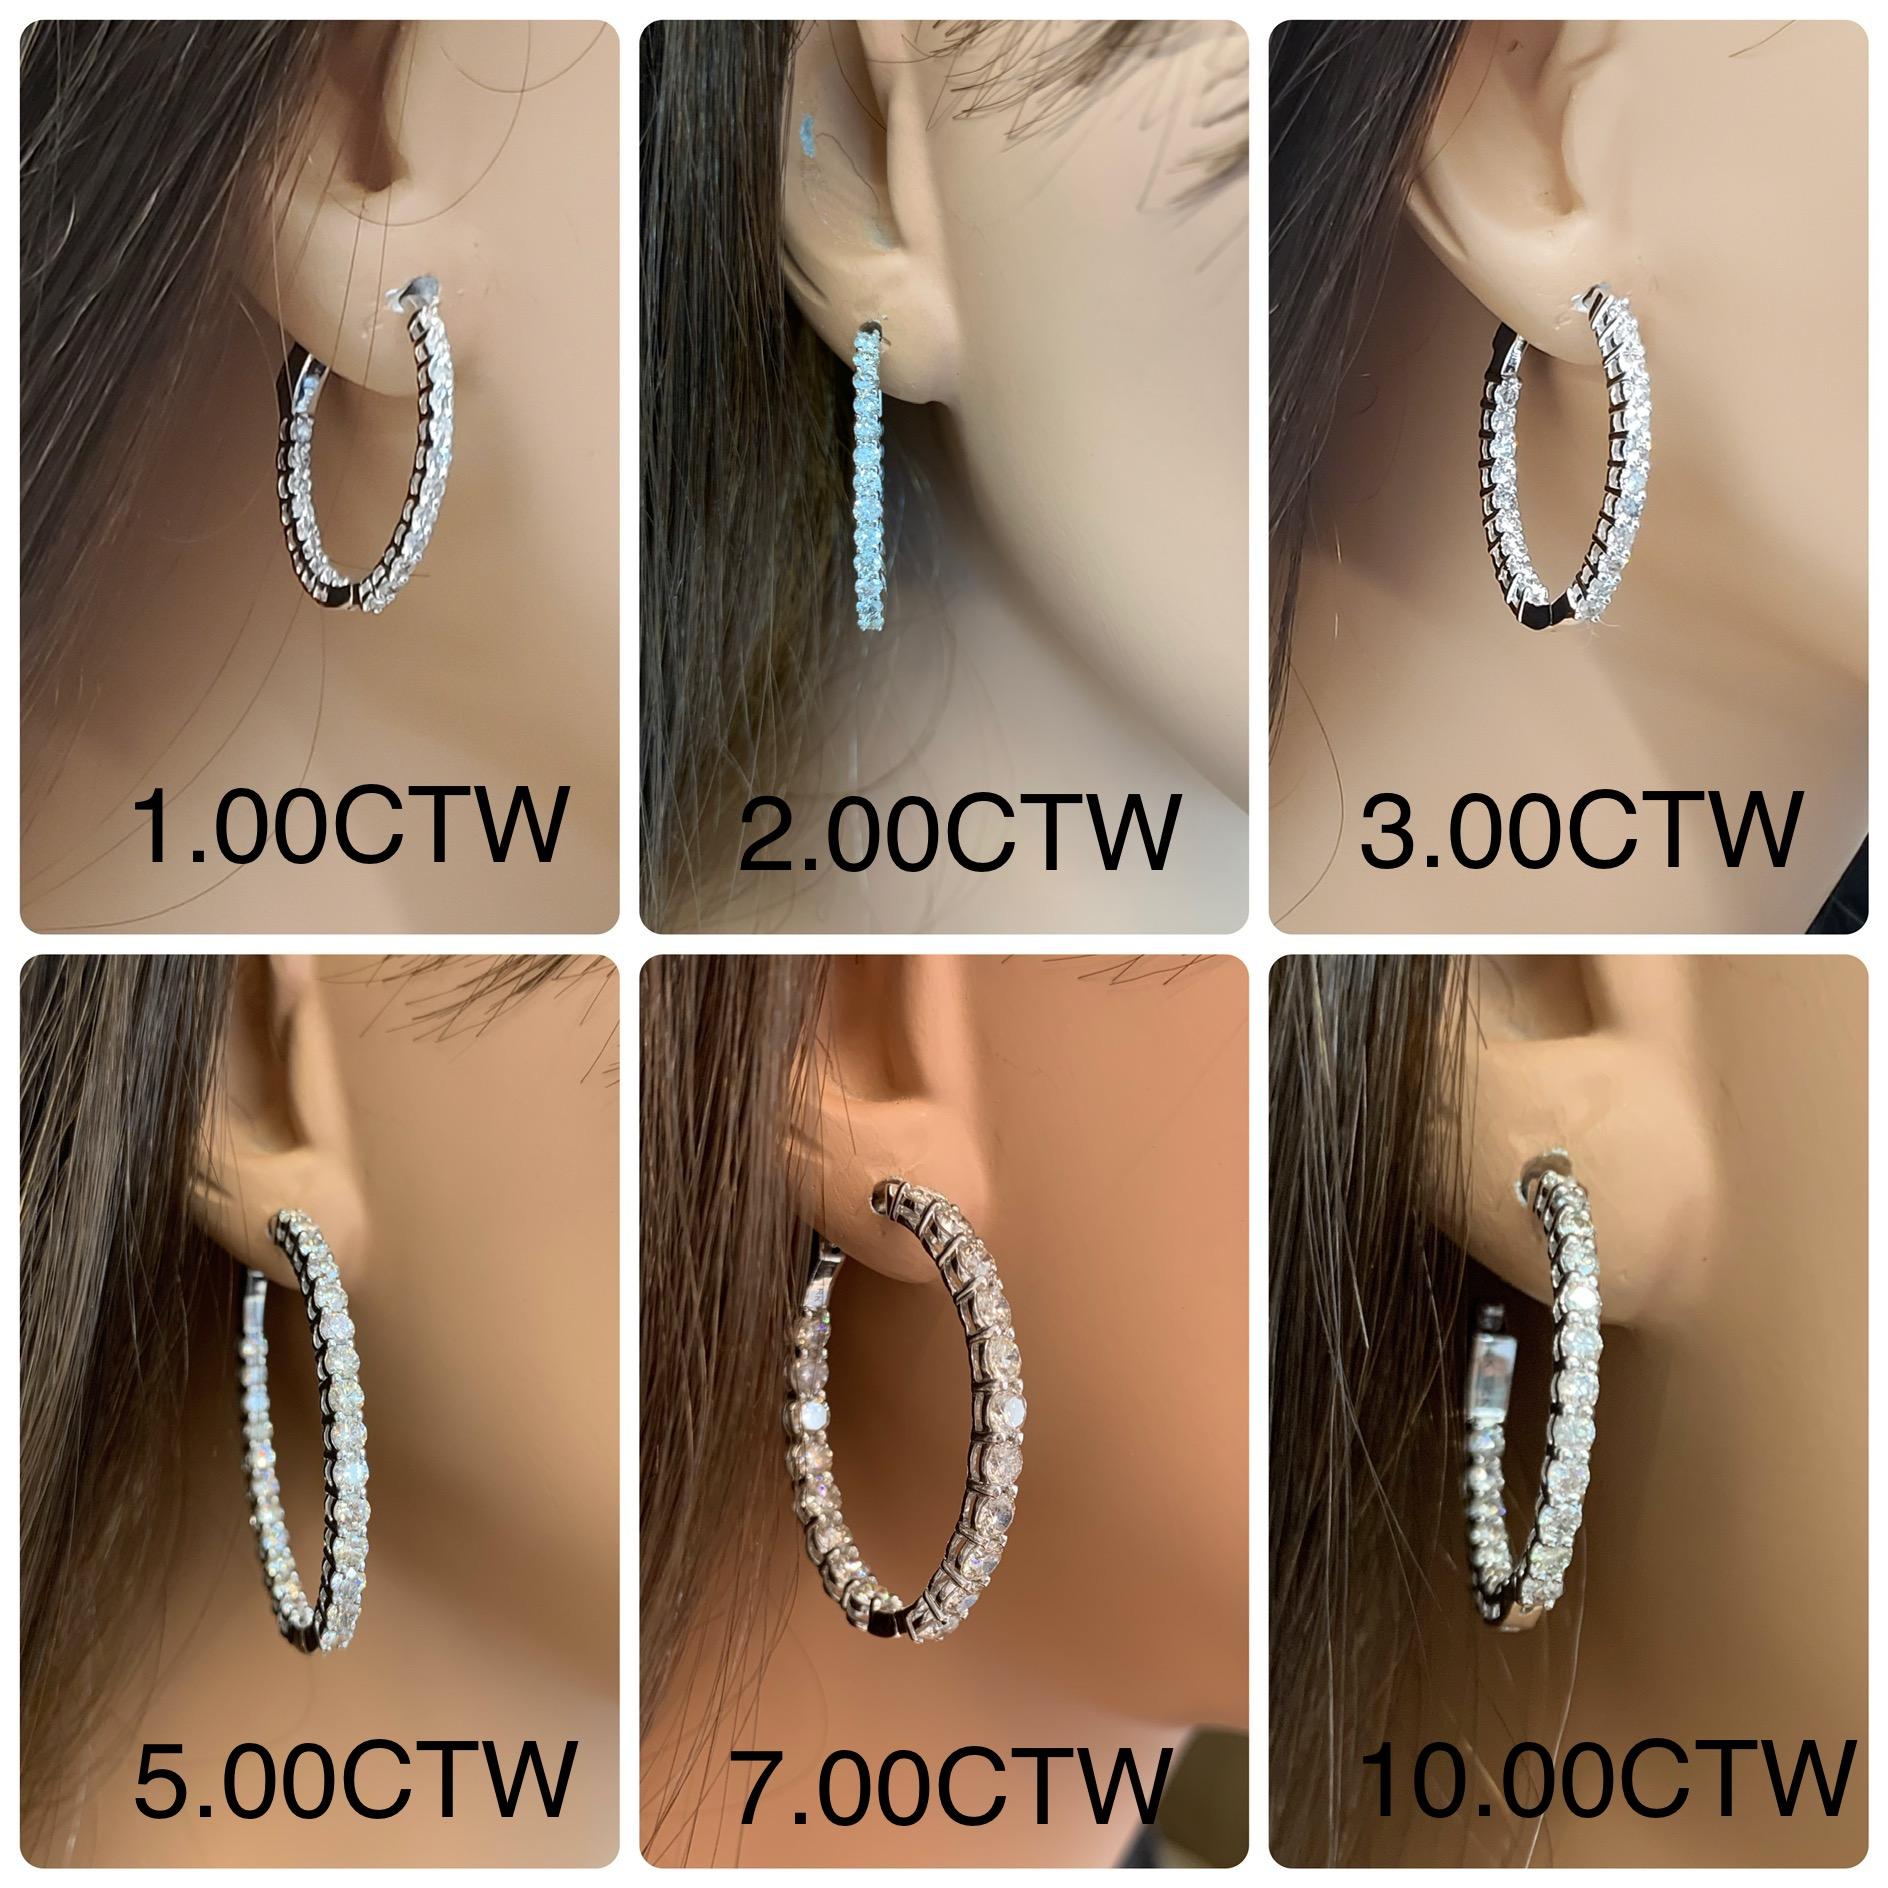 Contemporary 1.00 Carat Total Weight Diamond Inside-Outside Hoop Earrings in 14 Karat Gold For Sale